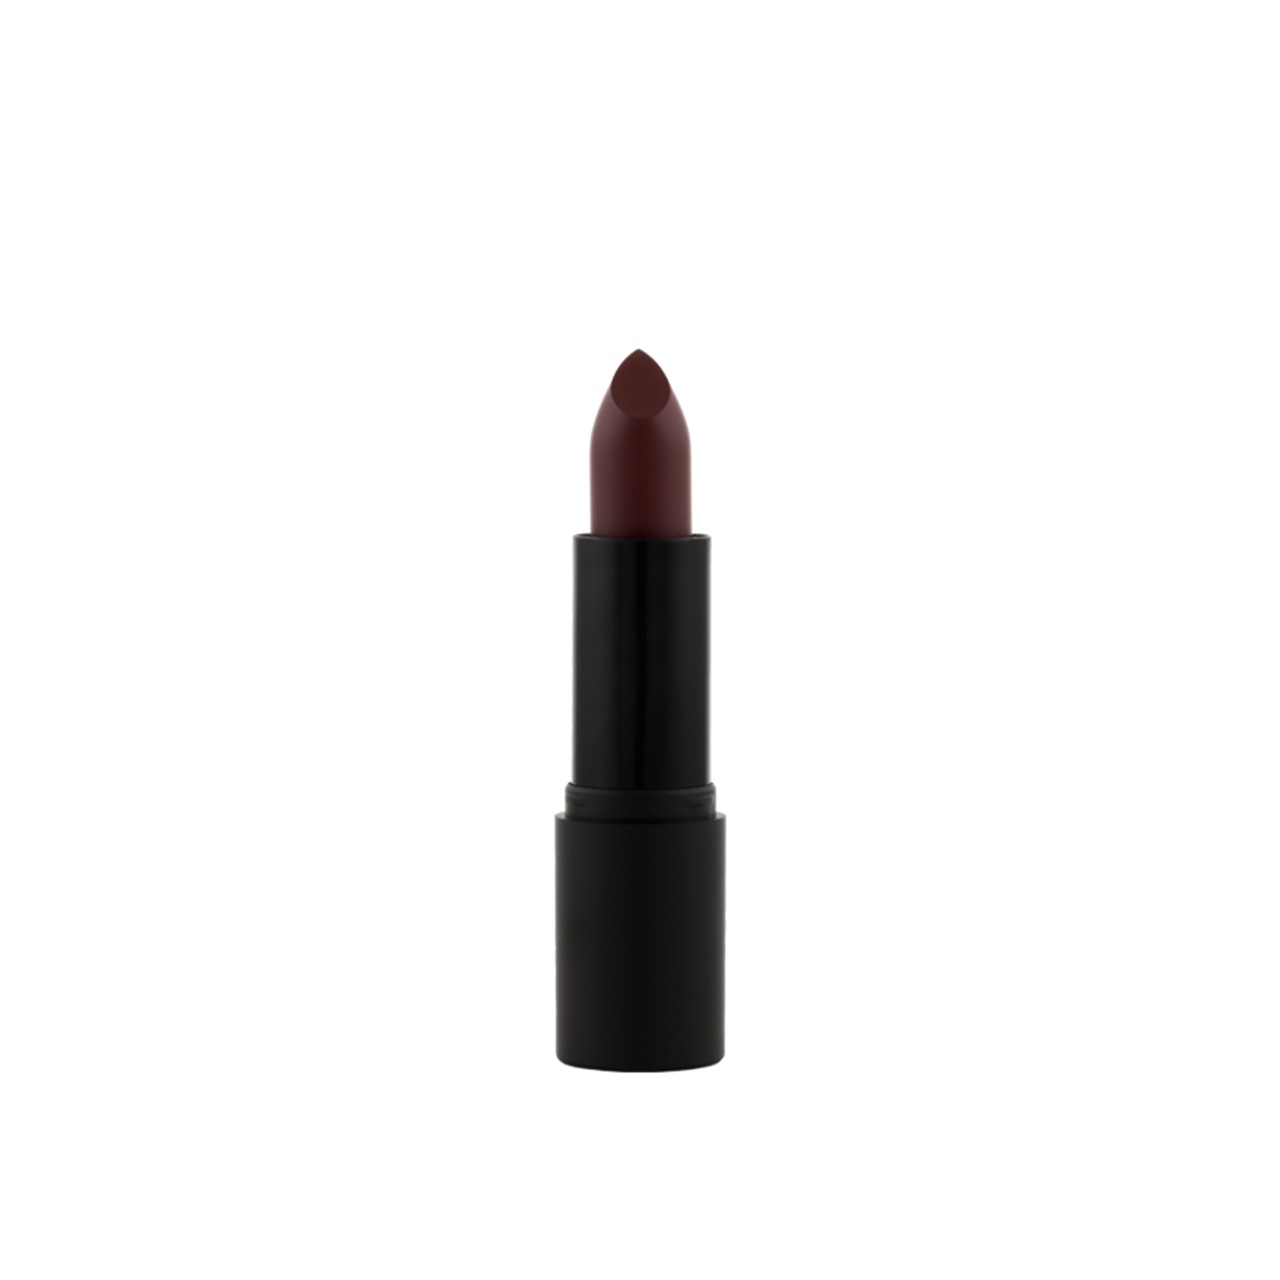 Skinerie Lips Matte Lipstick M06 Play Plum 3.5g (0.12oz)